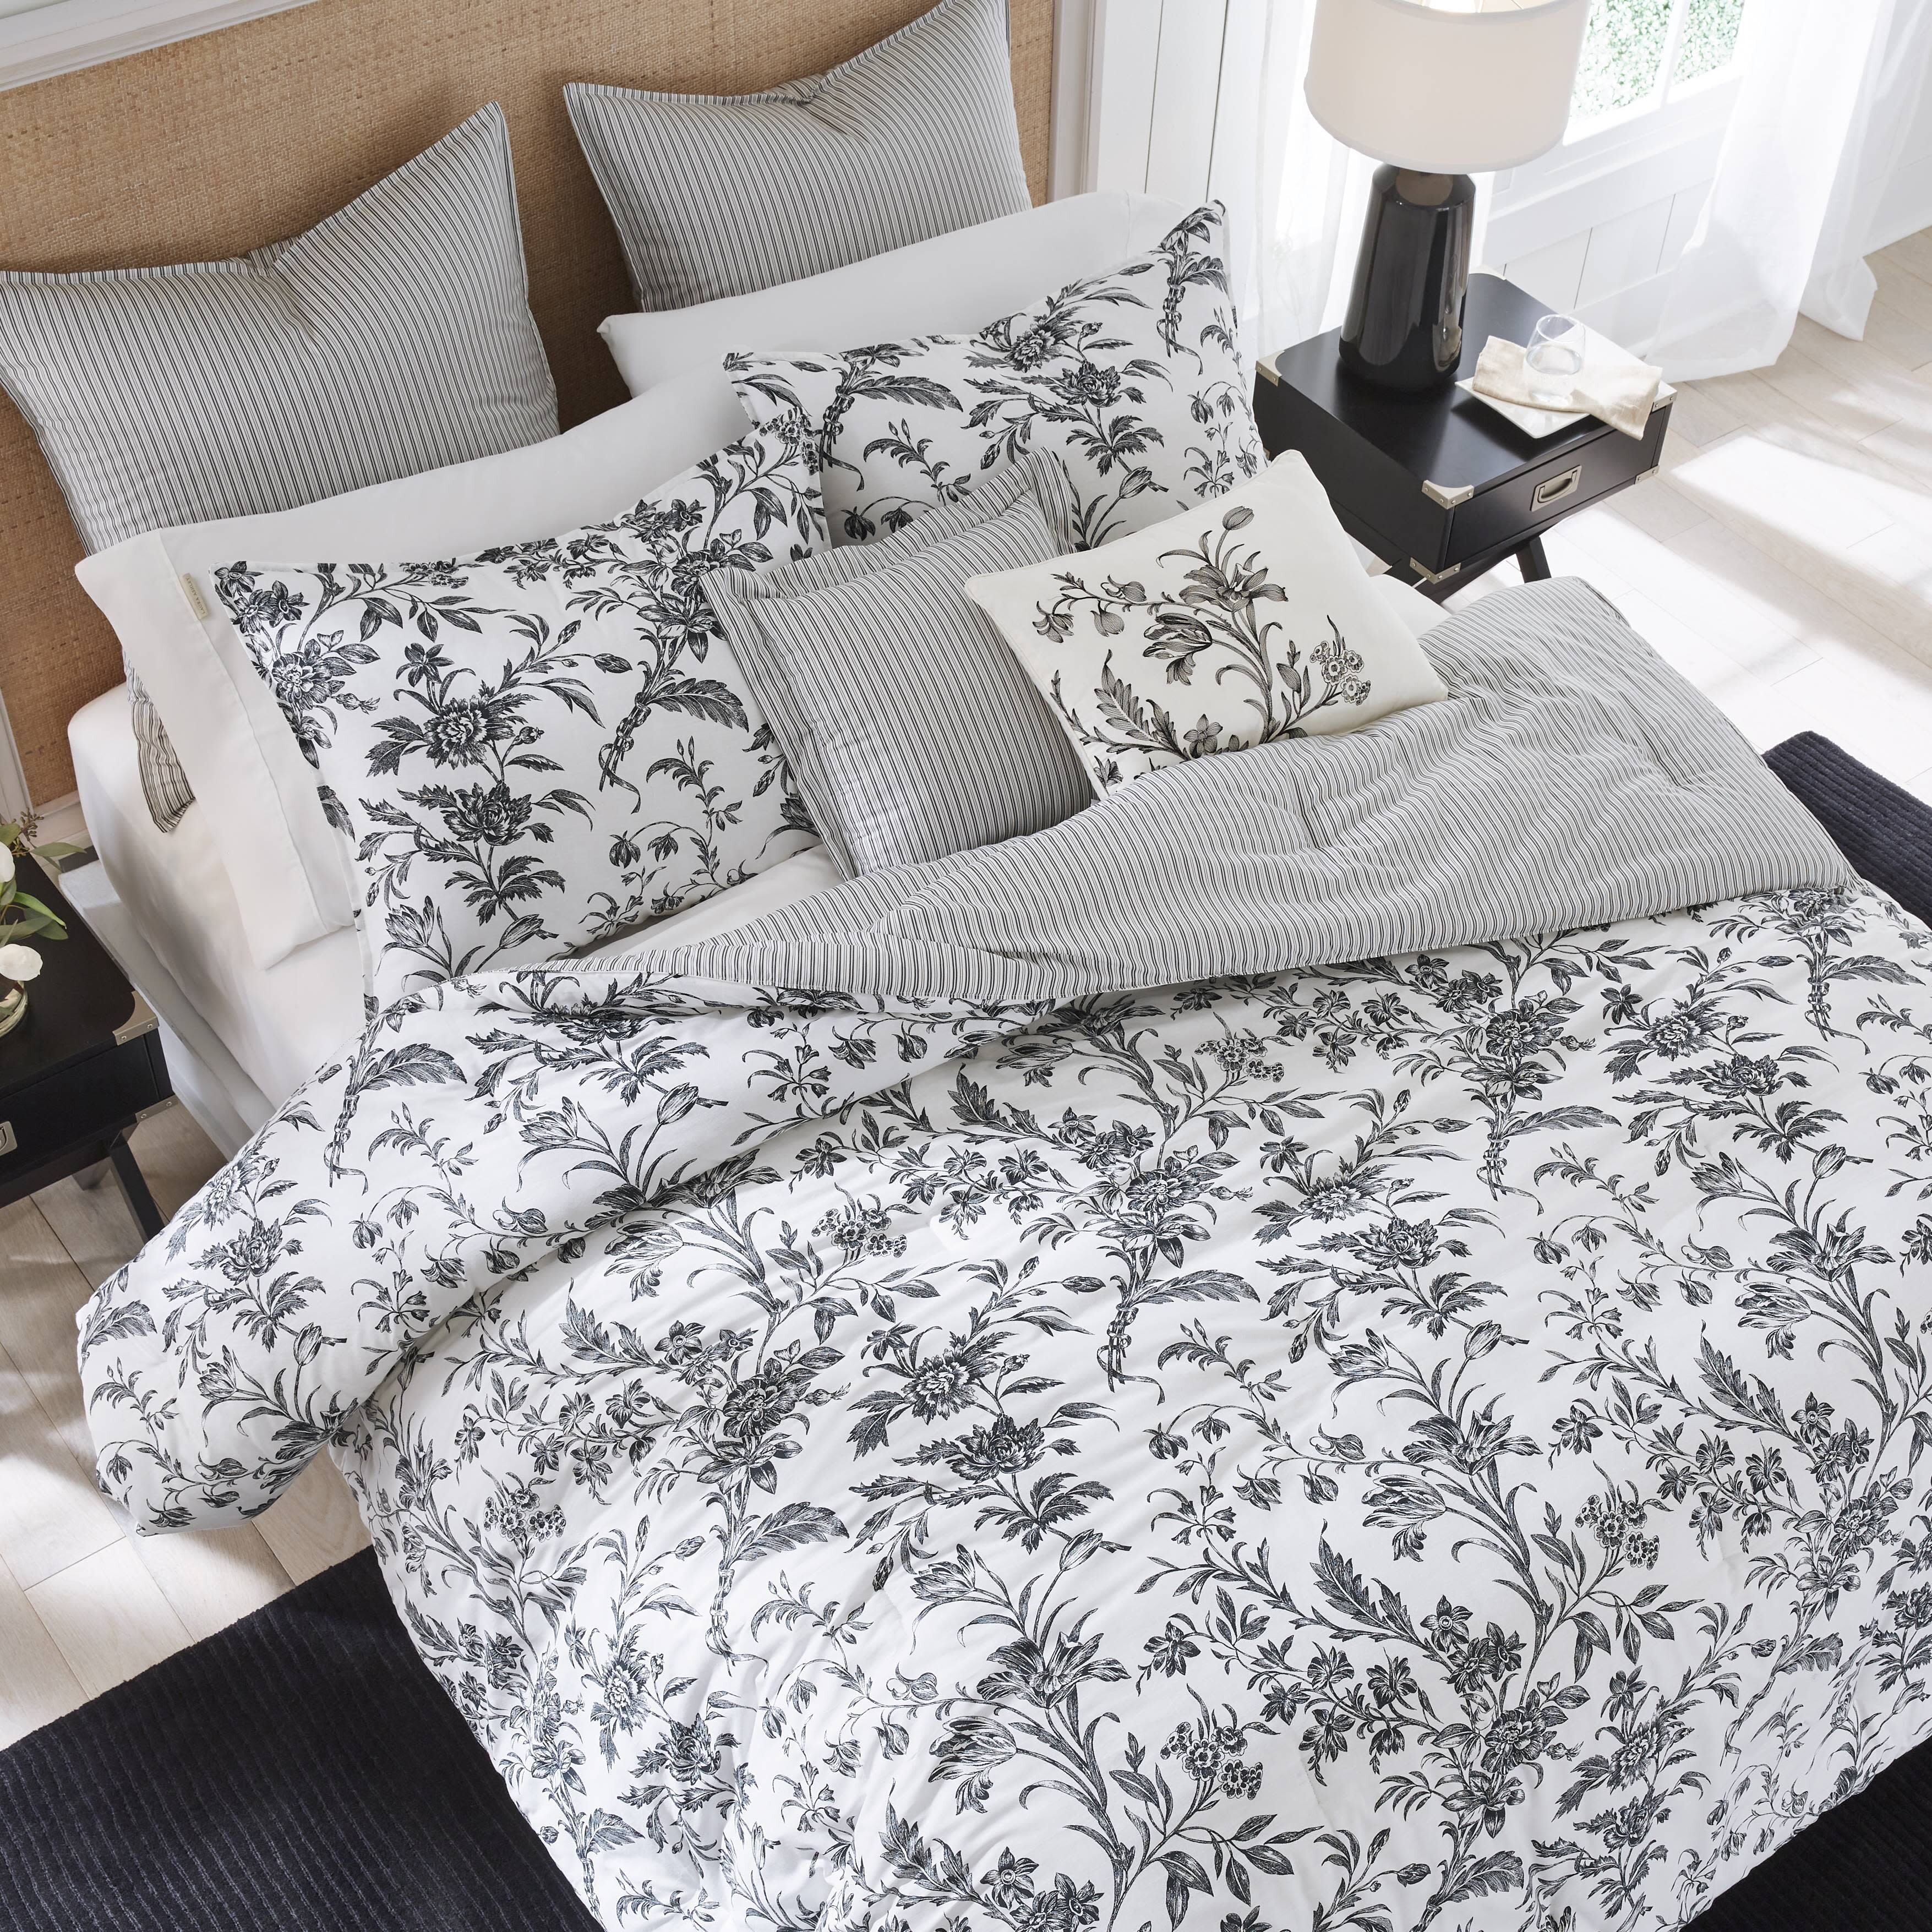 Laura Ashley Amberley Floral 100% Cotton Bonus Comforter Set includes Shams  and Decorative Pillows & Reviews